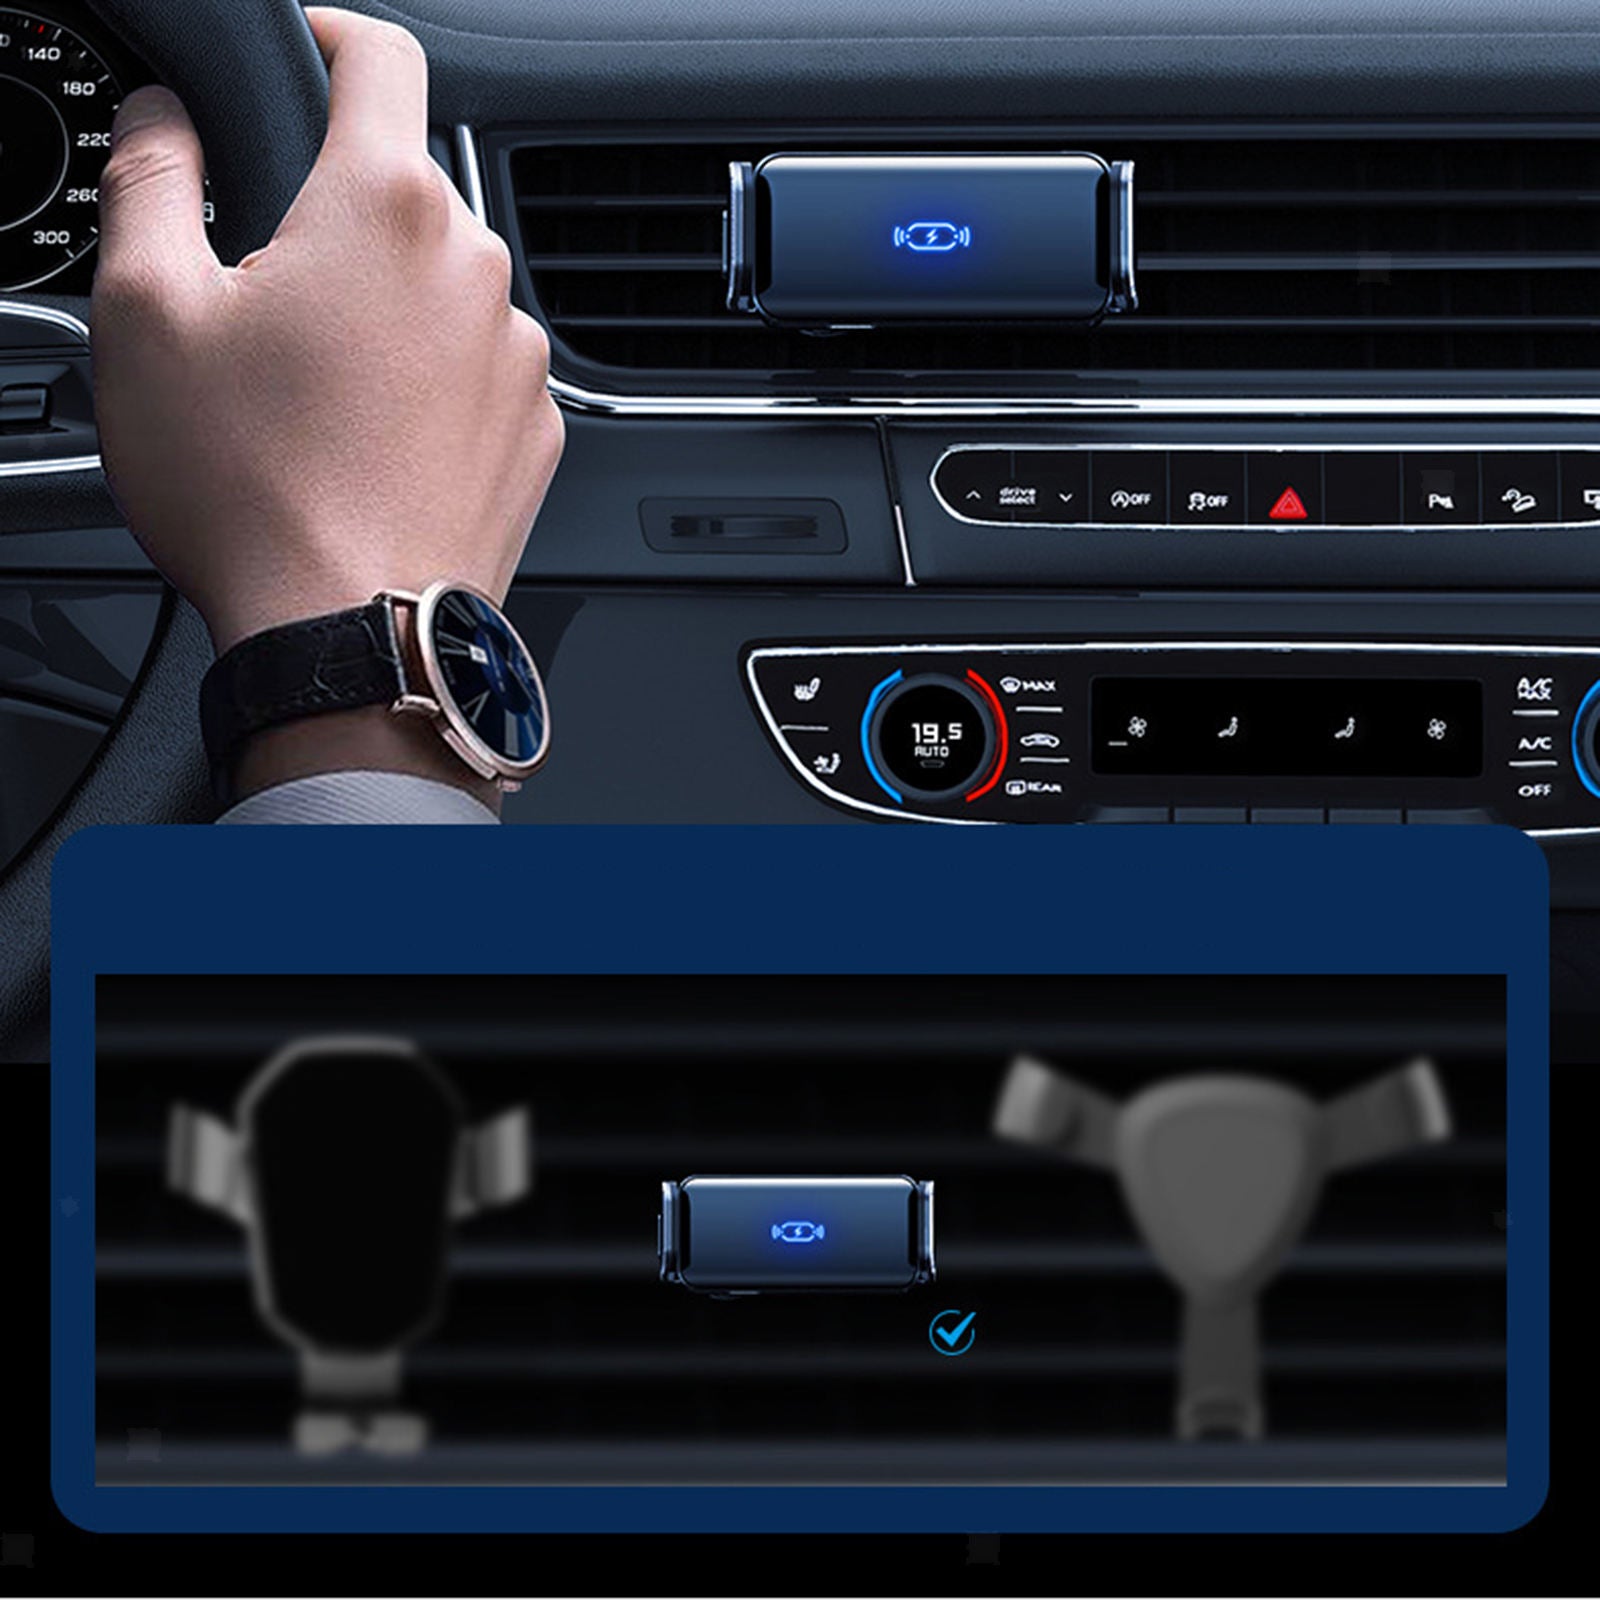 Universal 360Â° Rotating Car Phone Holder Infrared Sensor Auto Clamping